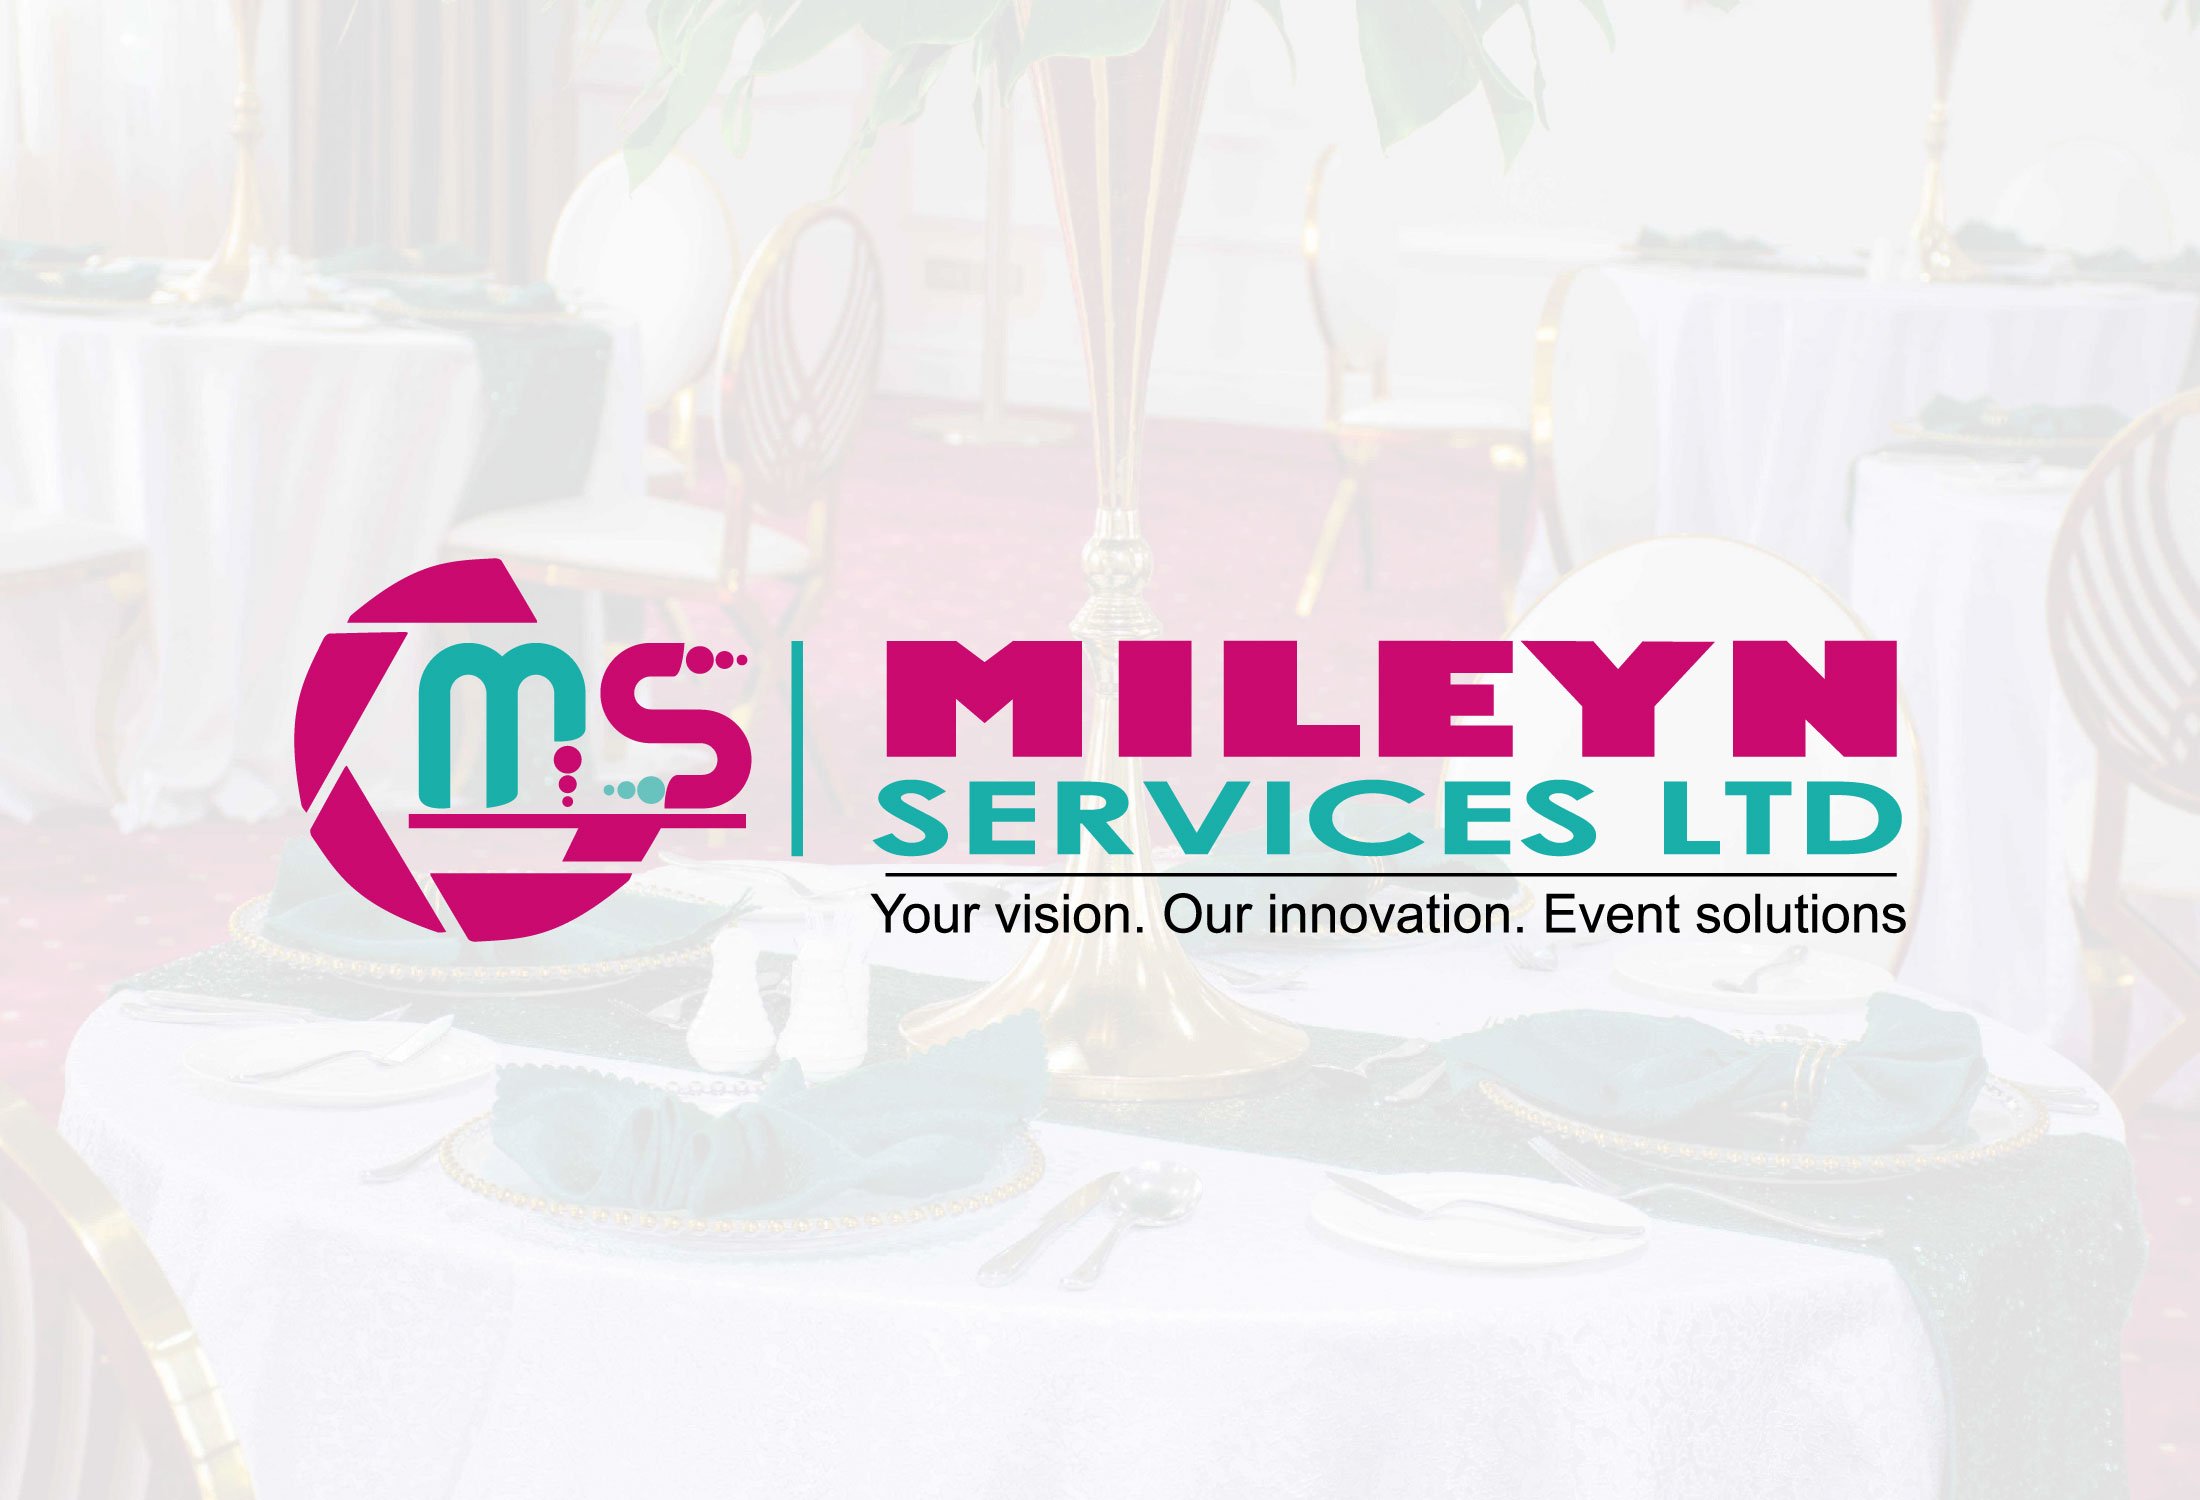 Mileyn_Services_Limited_Website